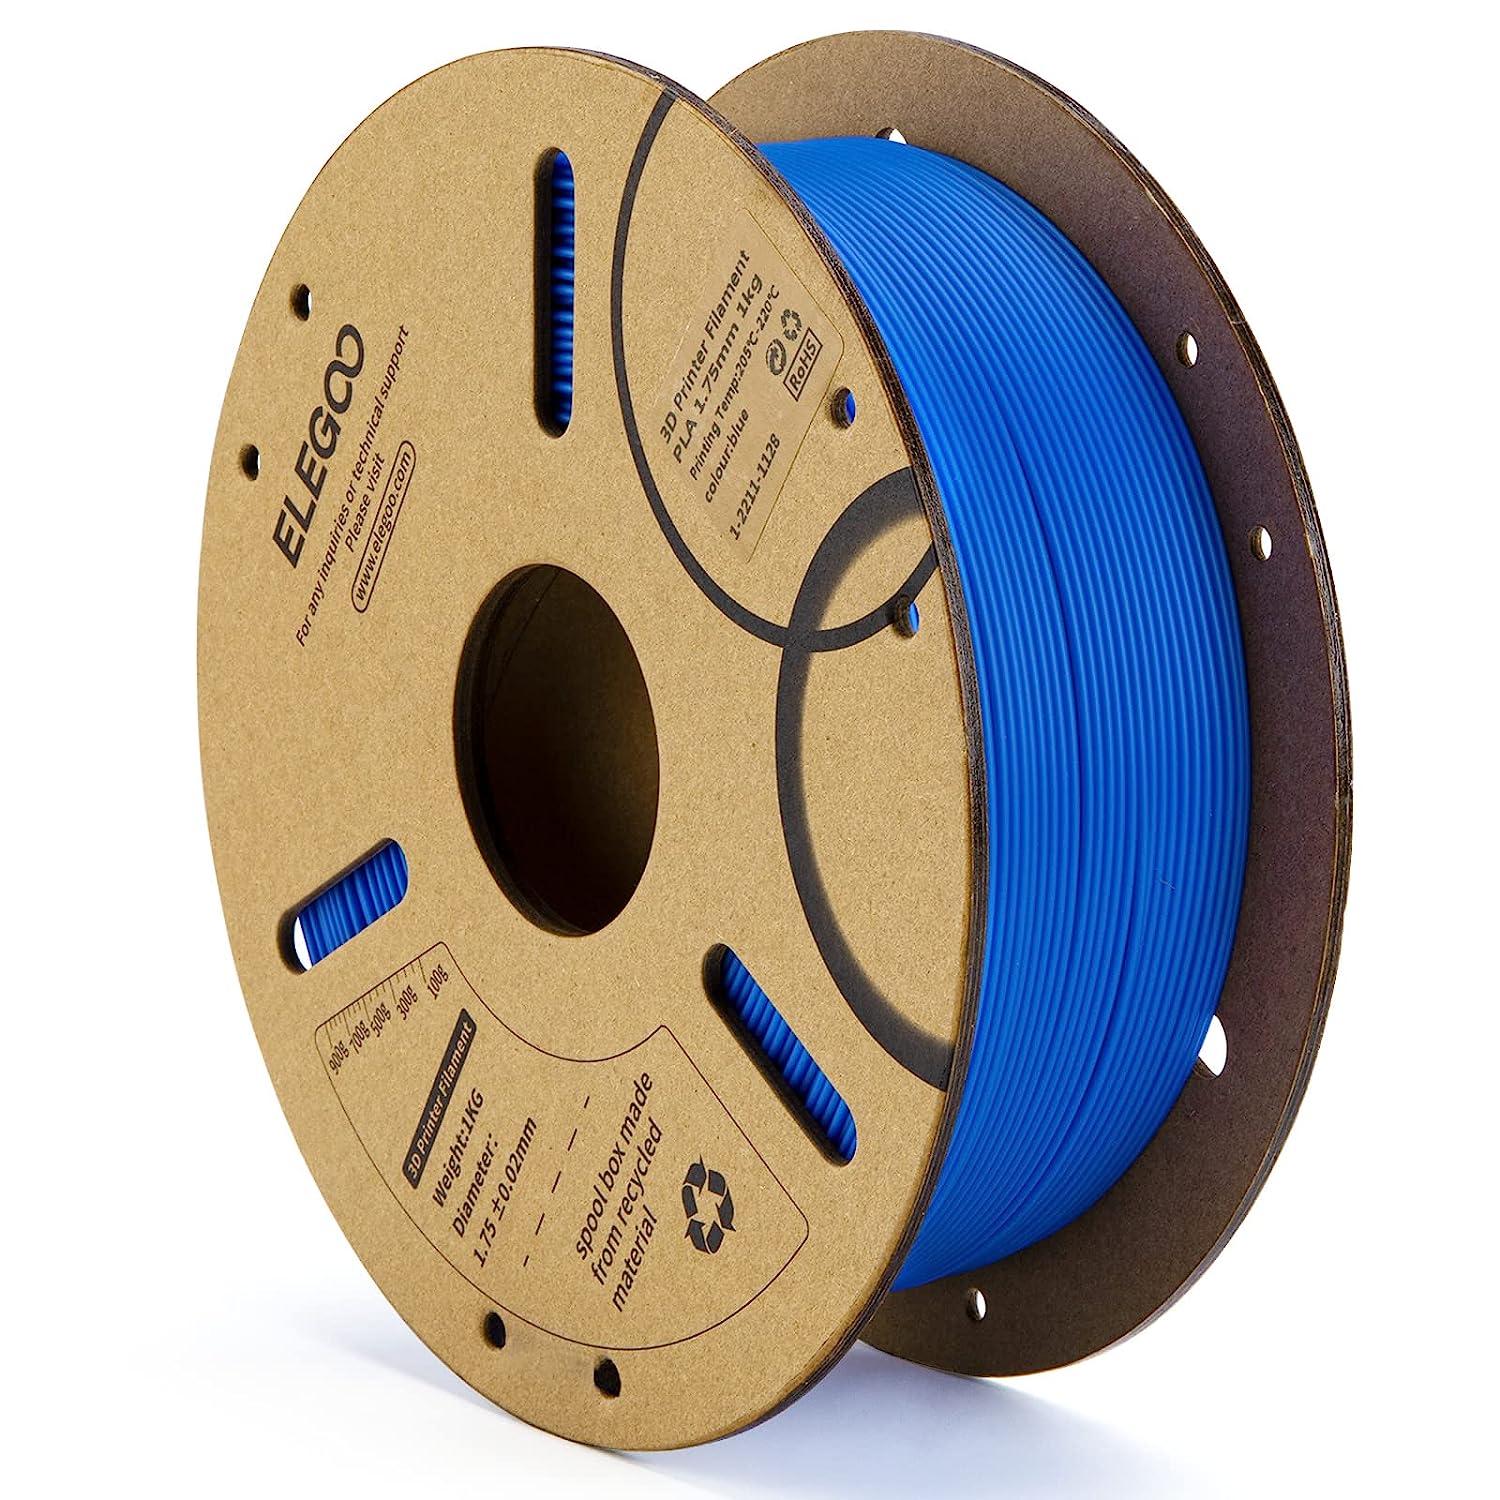 ELEGOO PLA Filament 1.75mm 3D Printer Filament 1Kg Cardboard Spool - Blue